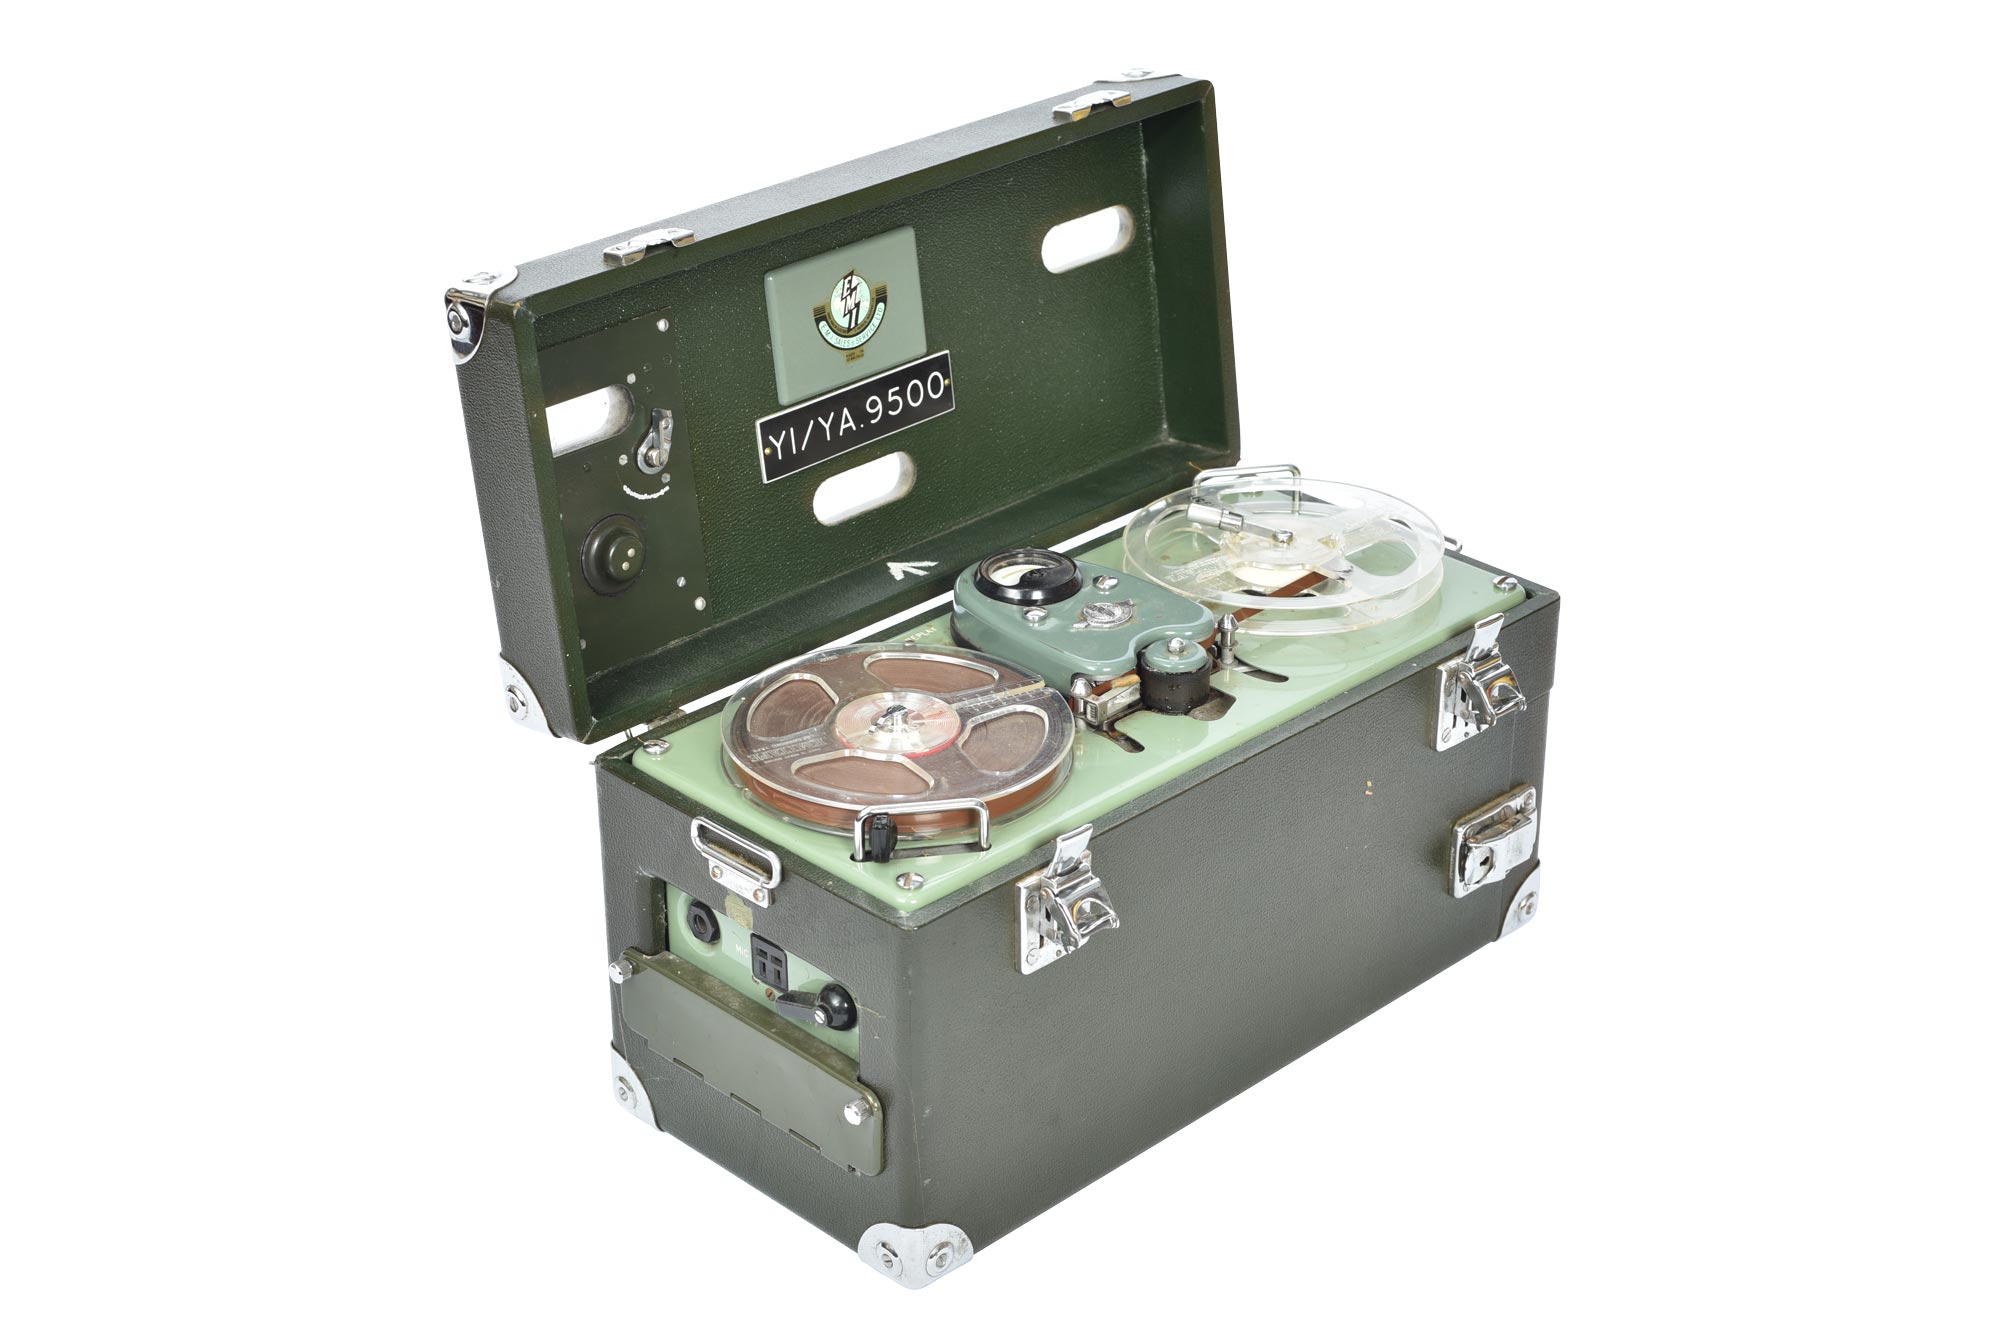 EMI Model L2A portable valve reel to reel tape recorder - Snellings Museum